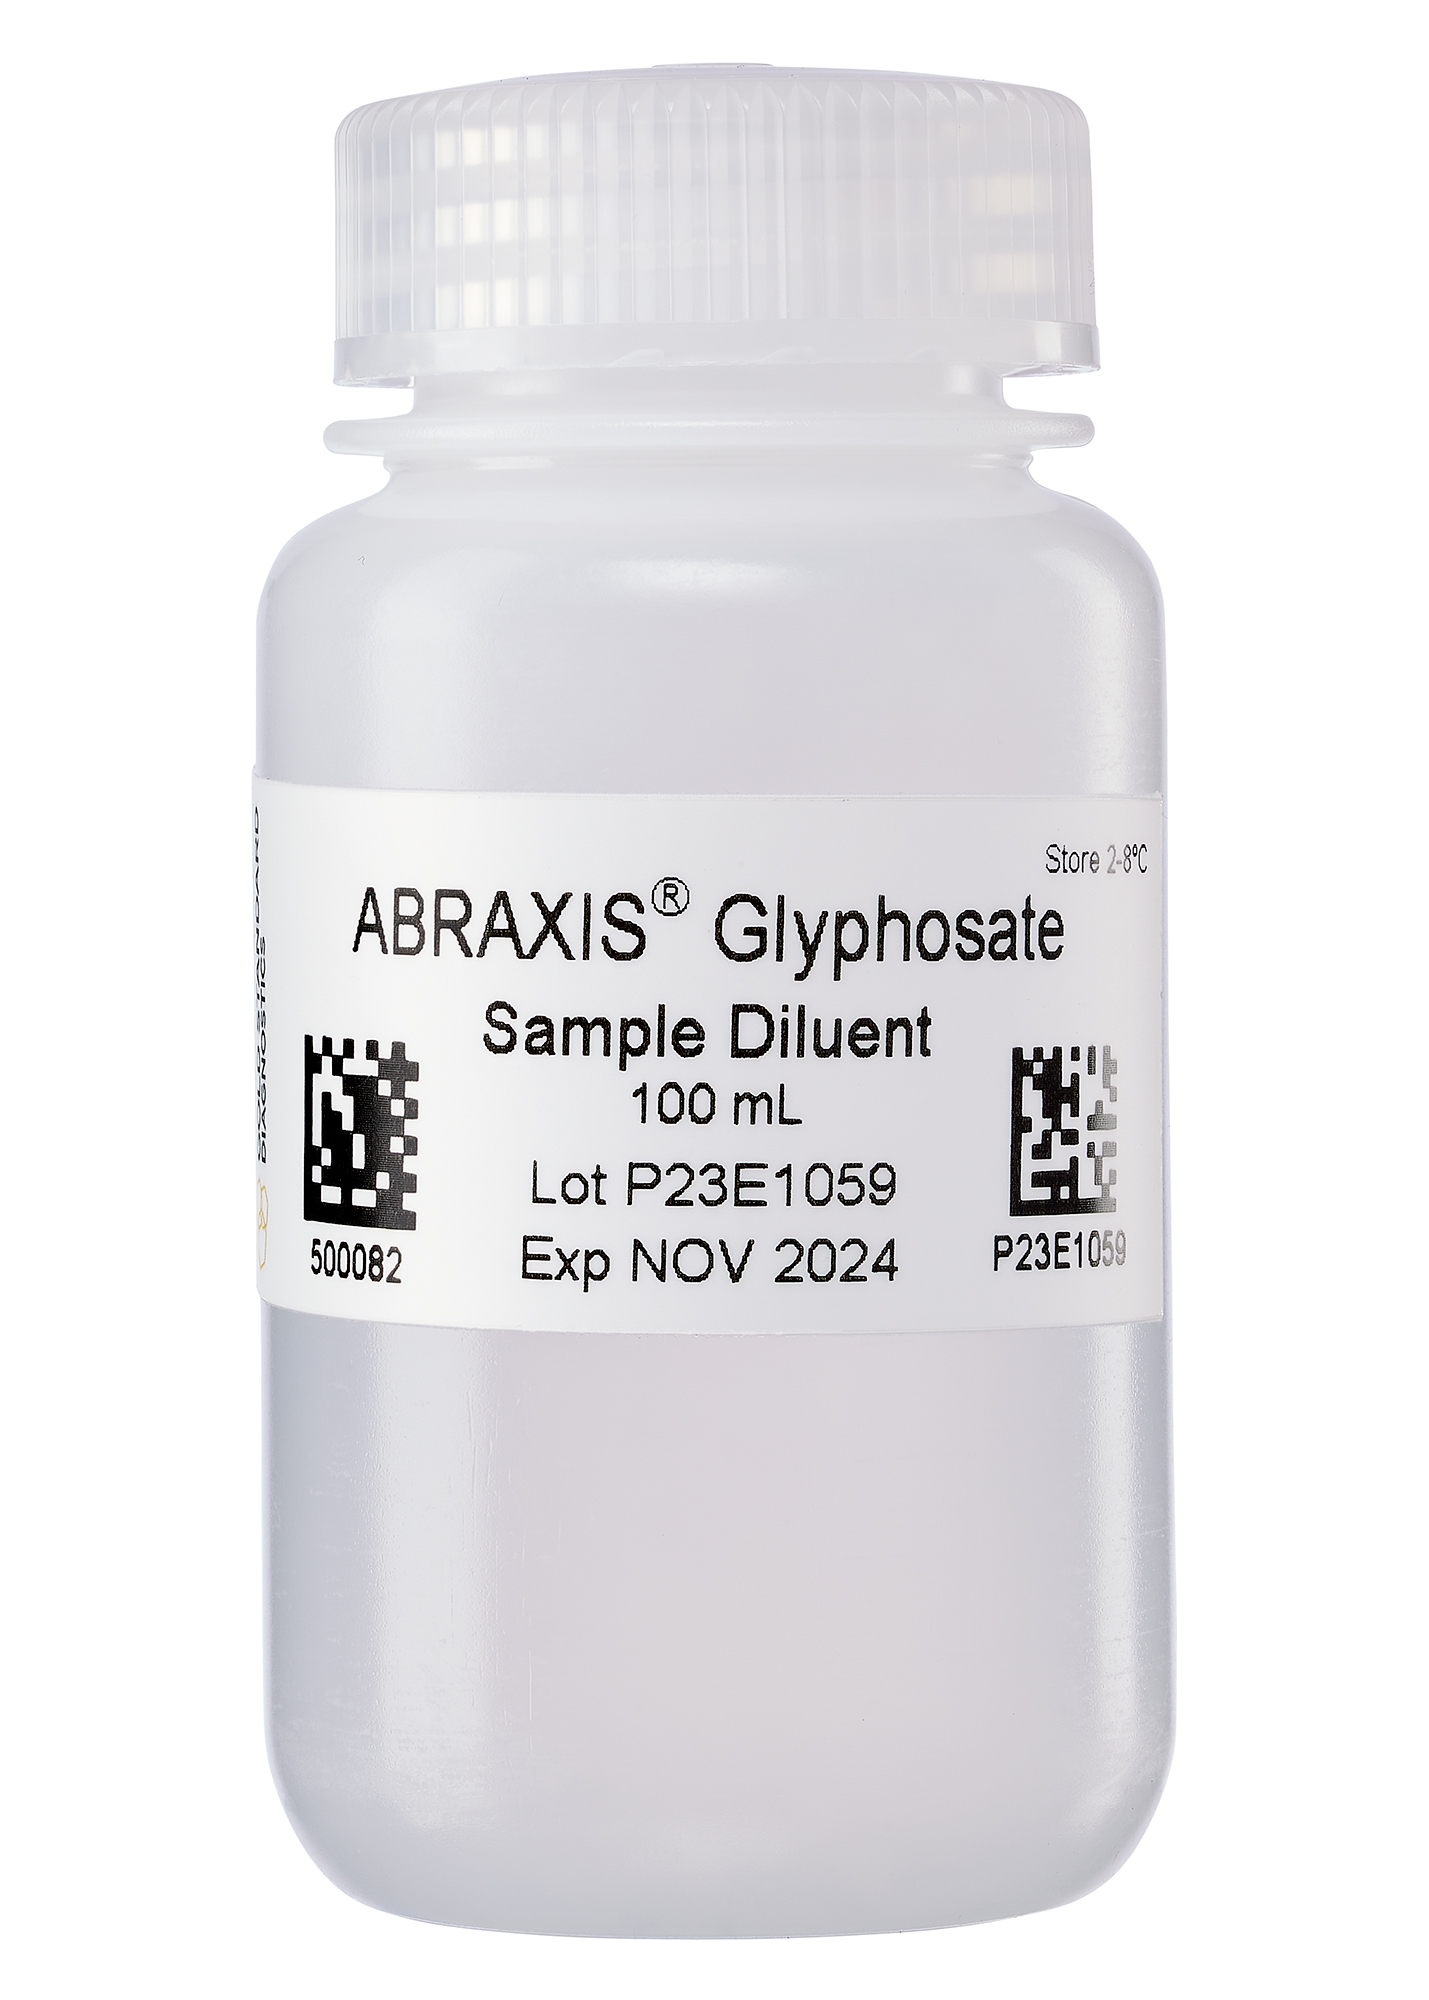 ABRAXIS® Glyphosate, Sample Diluent, 100 mL